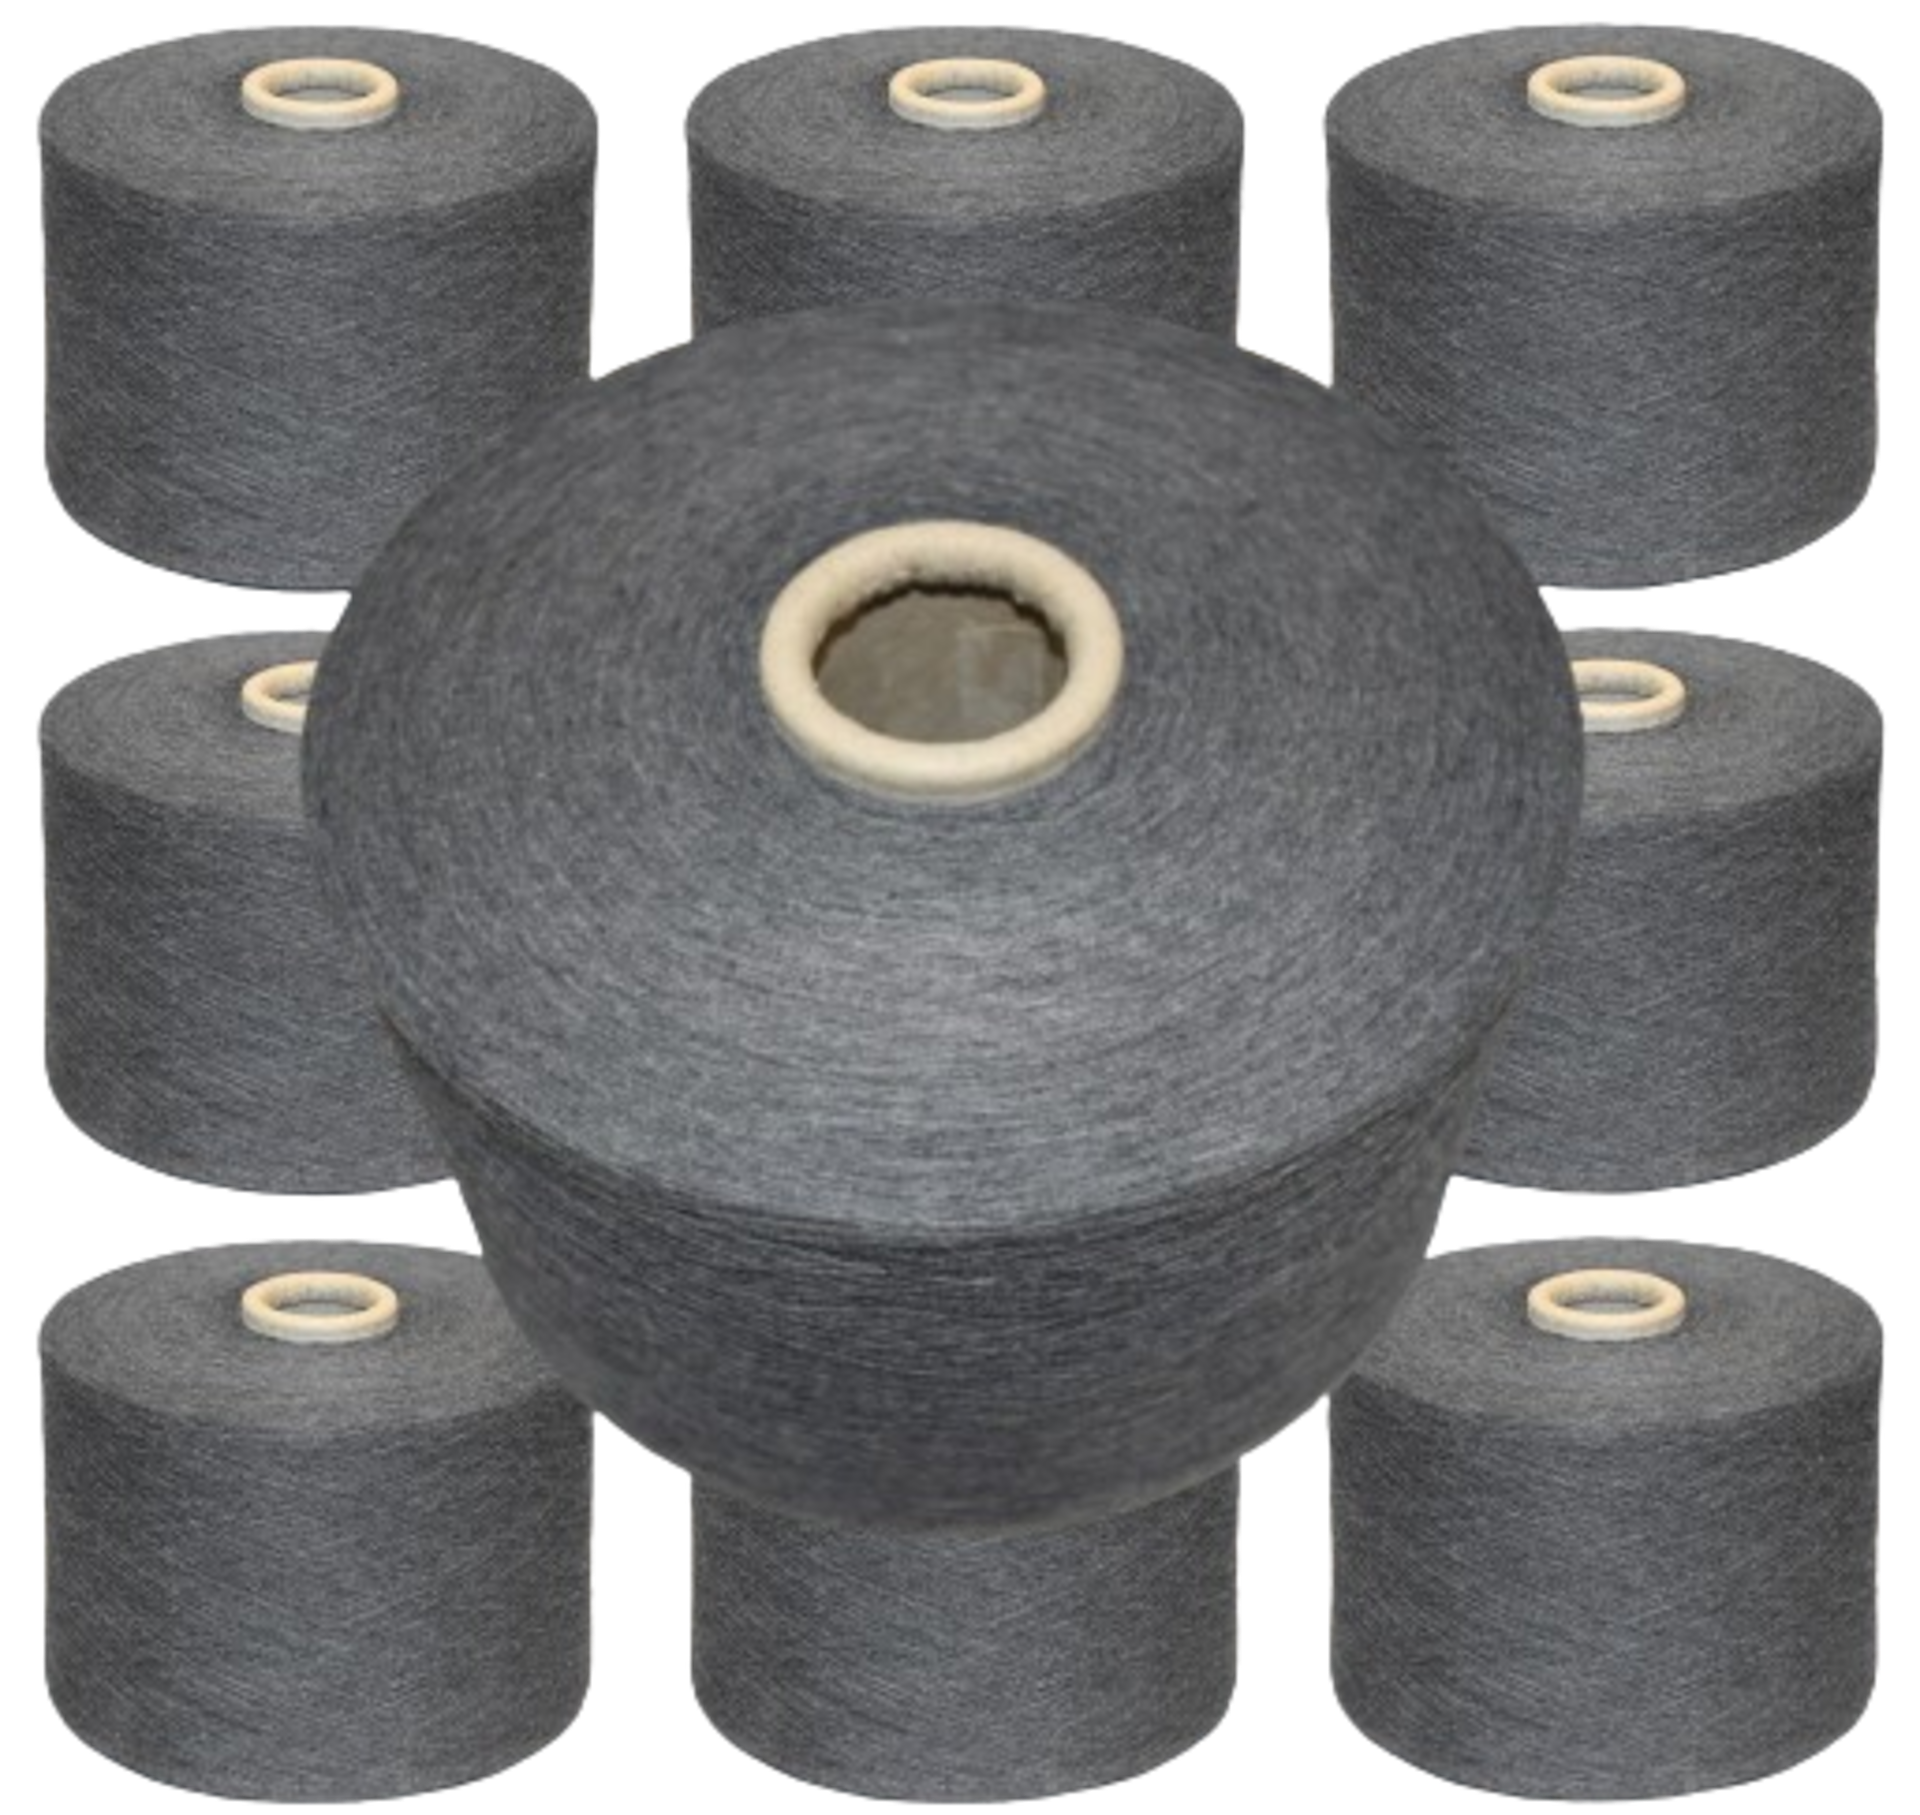 10 x Cones of 1/13 MicroCotton Knitting Yarn - Mid Grey - Approx Weight: 2,500g - New Stock ABL Yarn